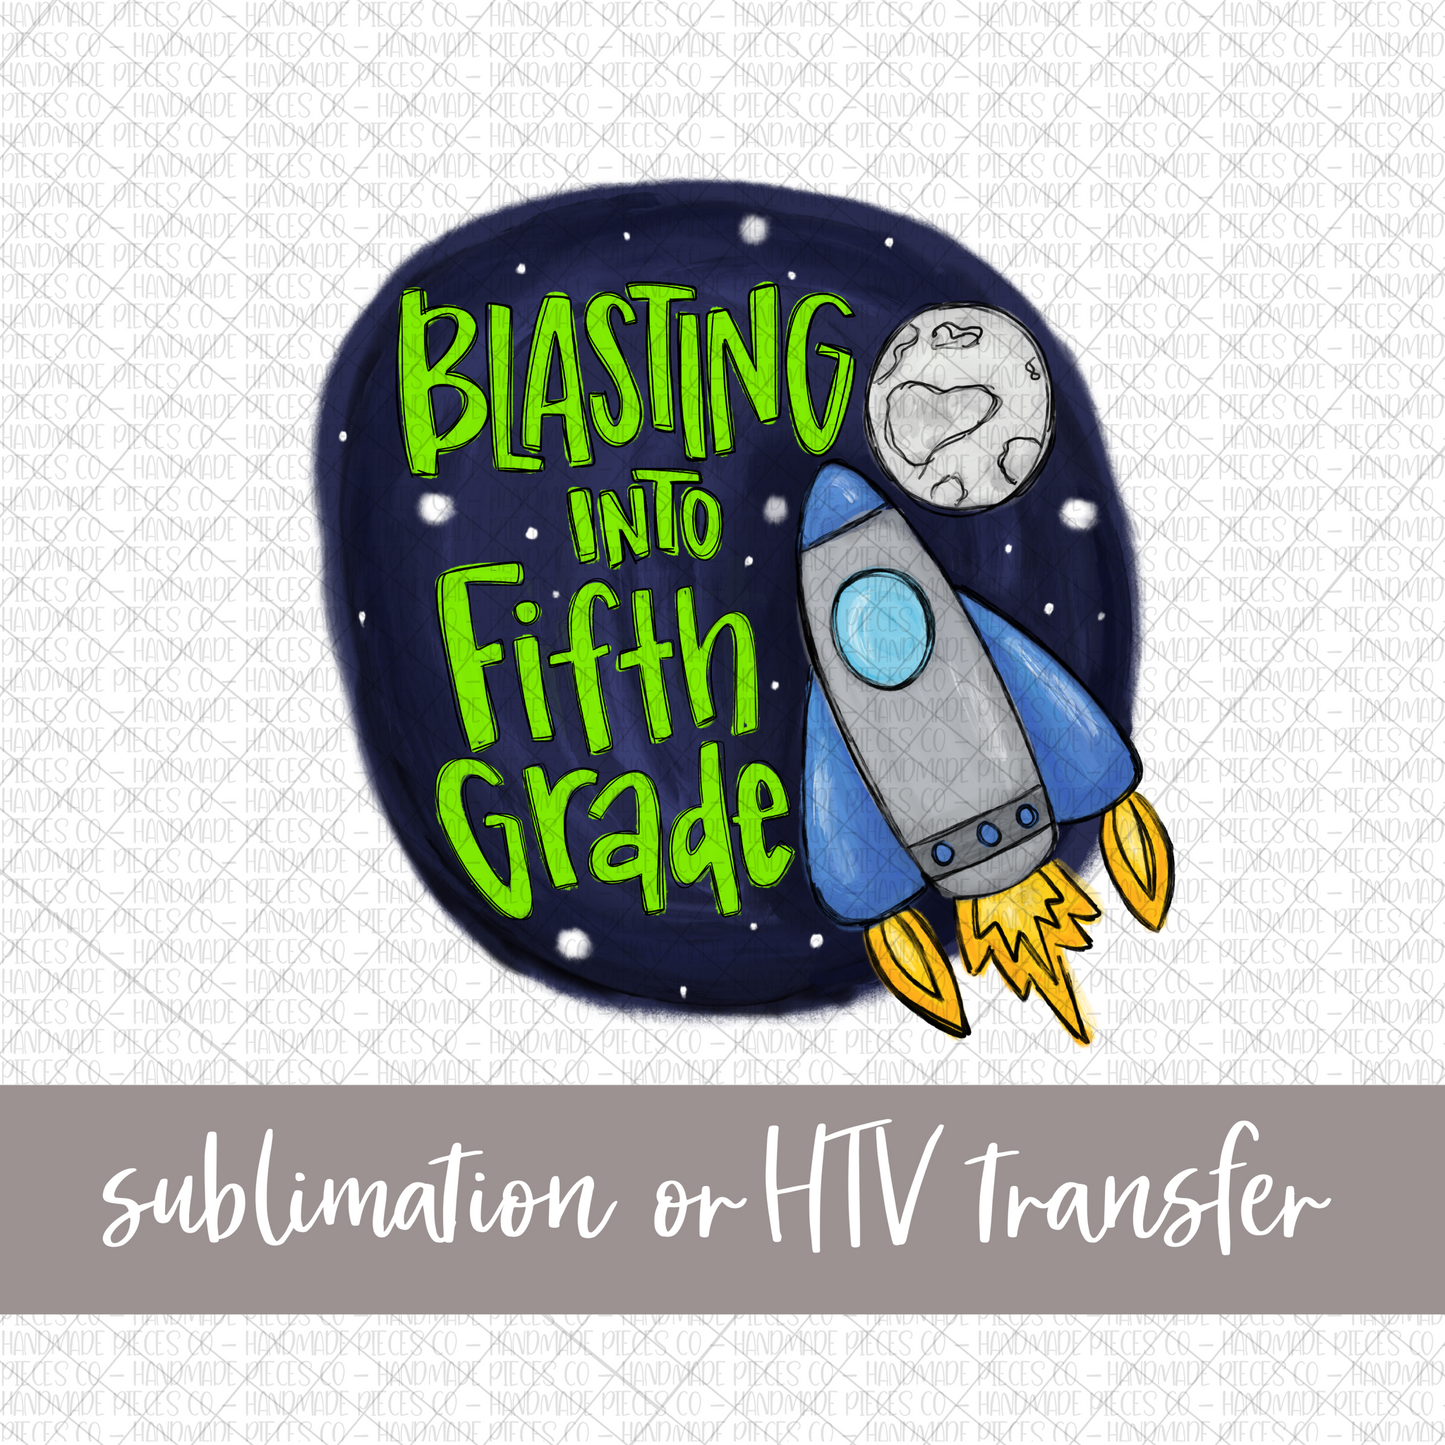 Blasting into Fifth Grade - Sublimation or HTV Transfer